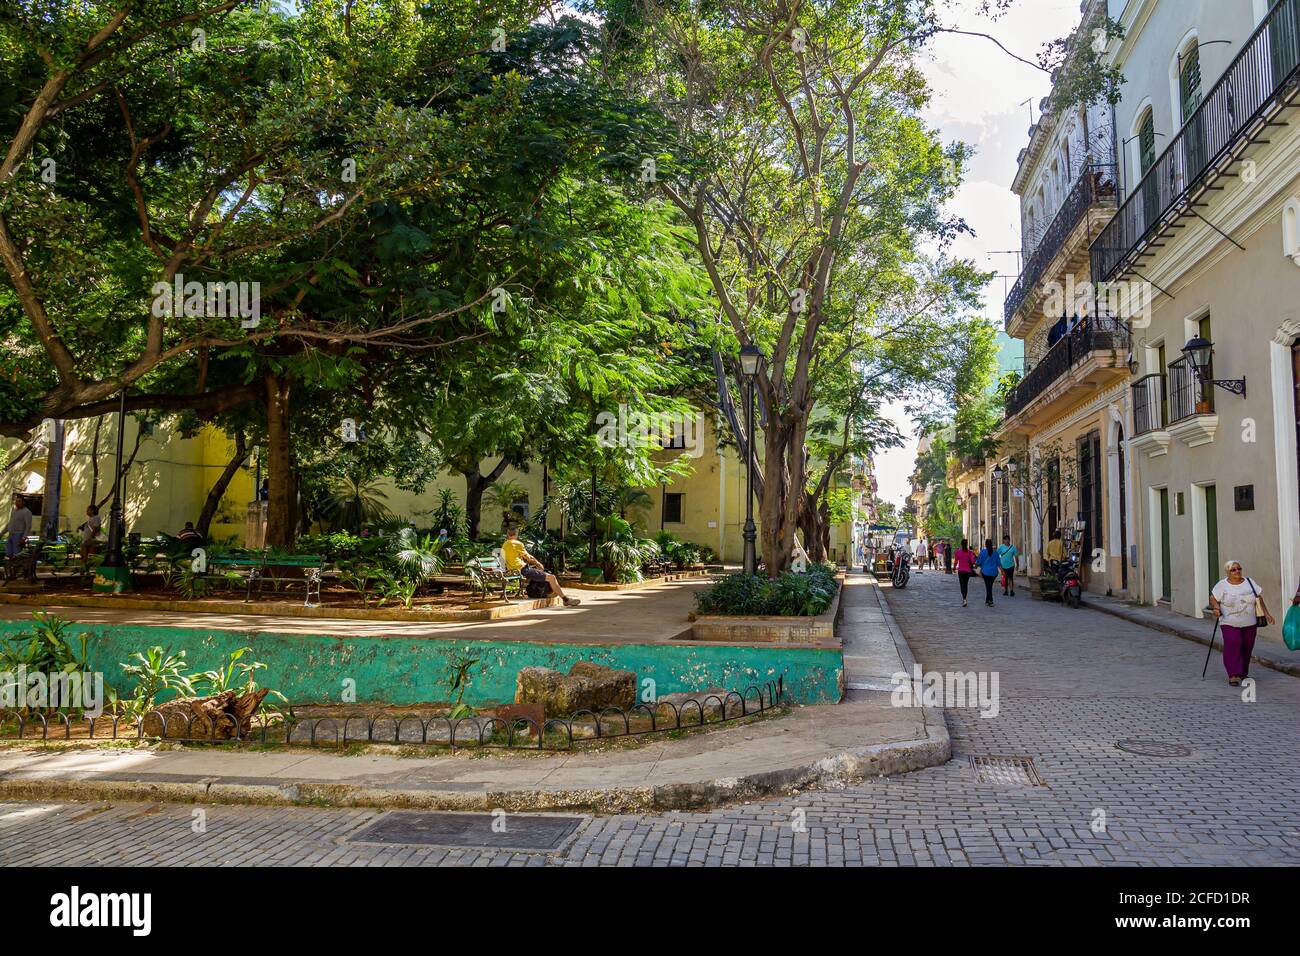 Parque Humboldt - kleiner Park in der Altstadt von Havanna, Kuba Stockfoto